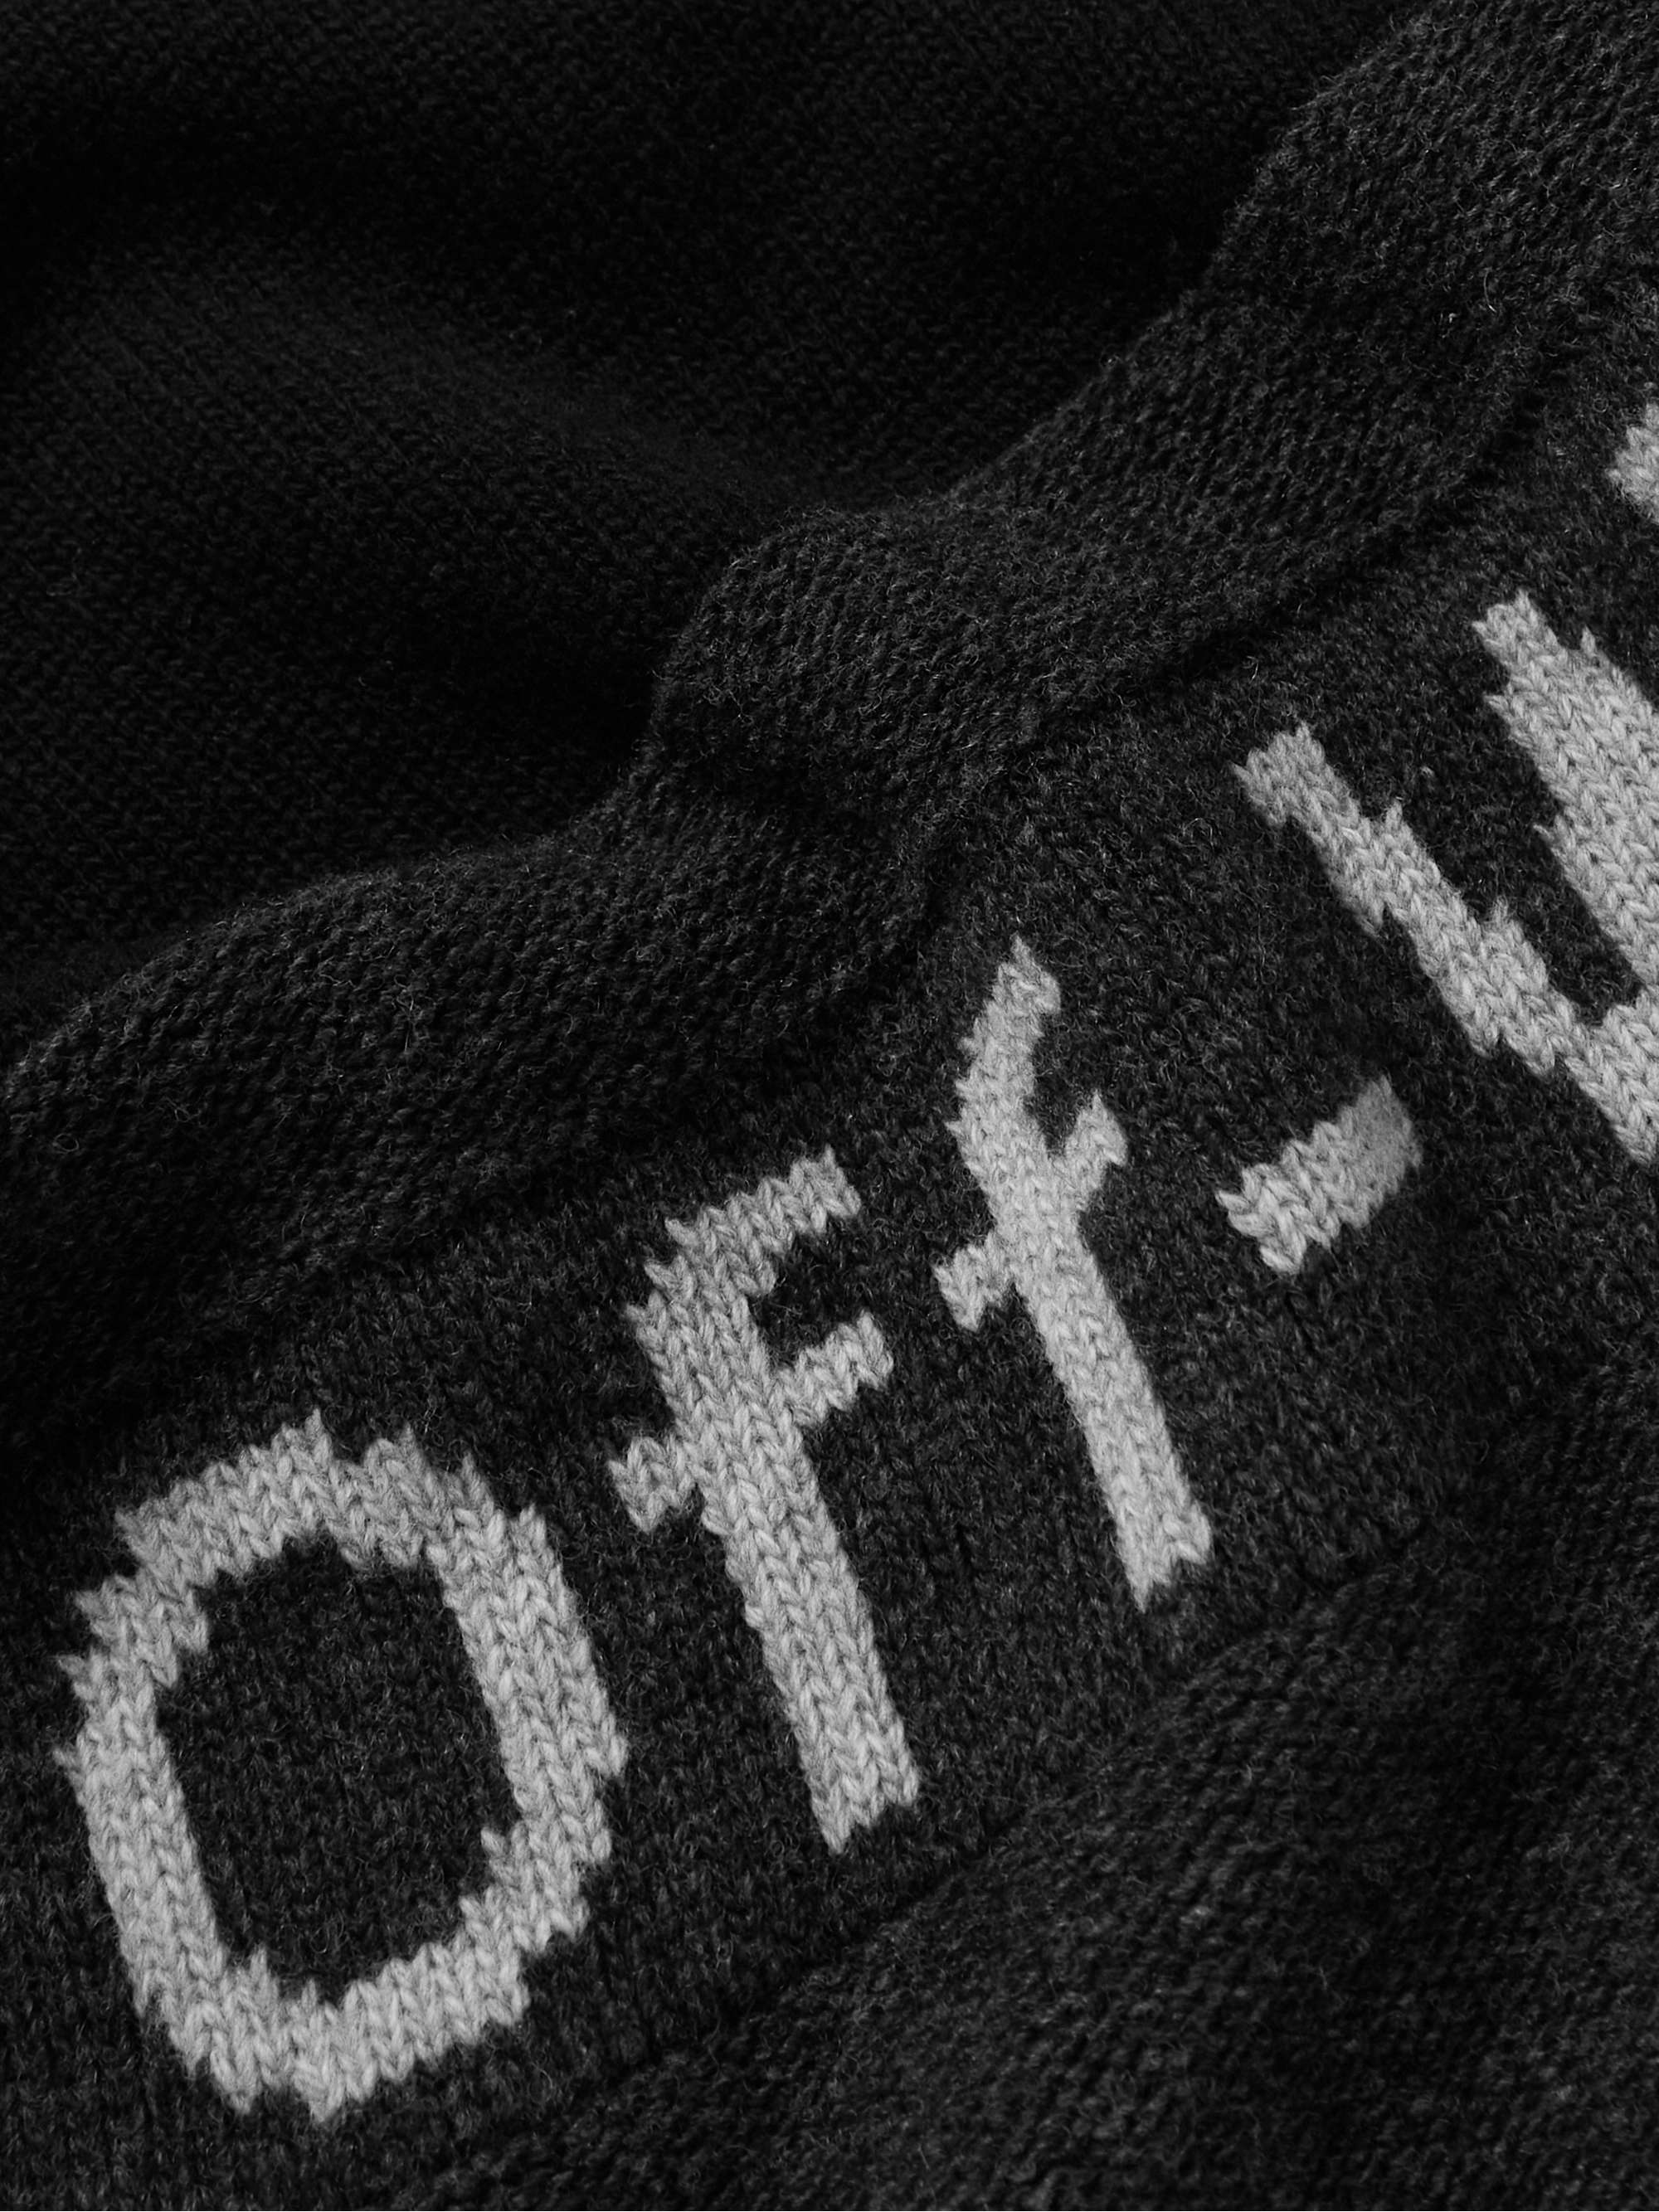 OFF-WHITE Logo-Intarsia Colour-Block Wool Sweater